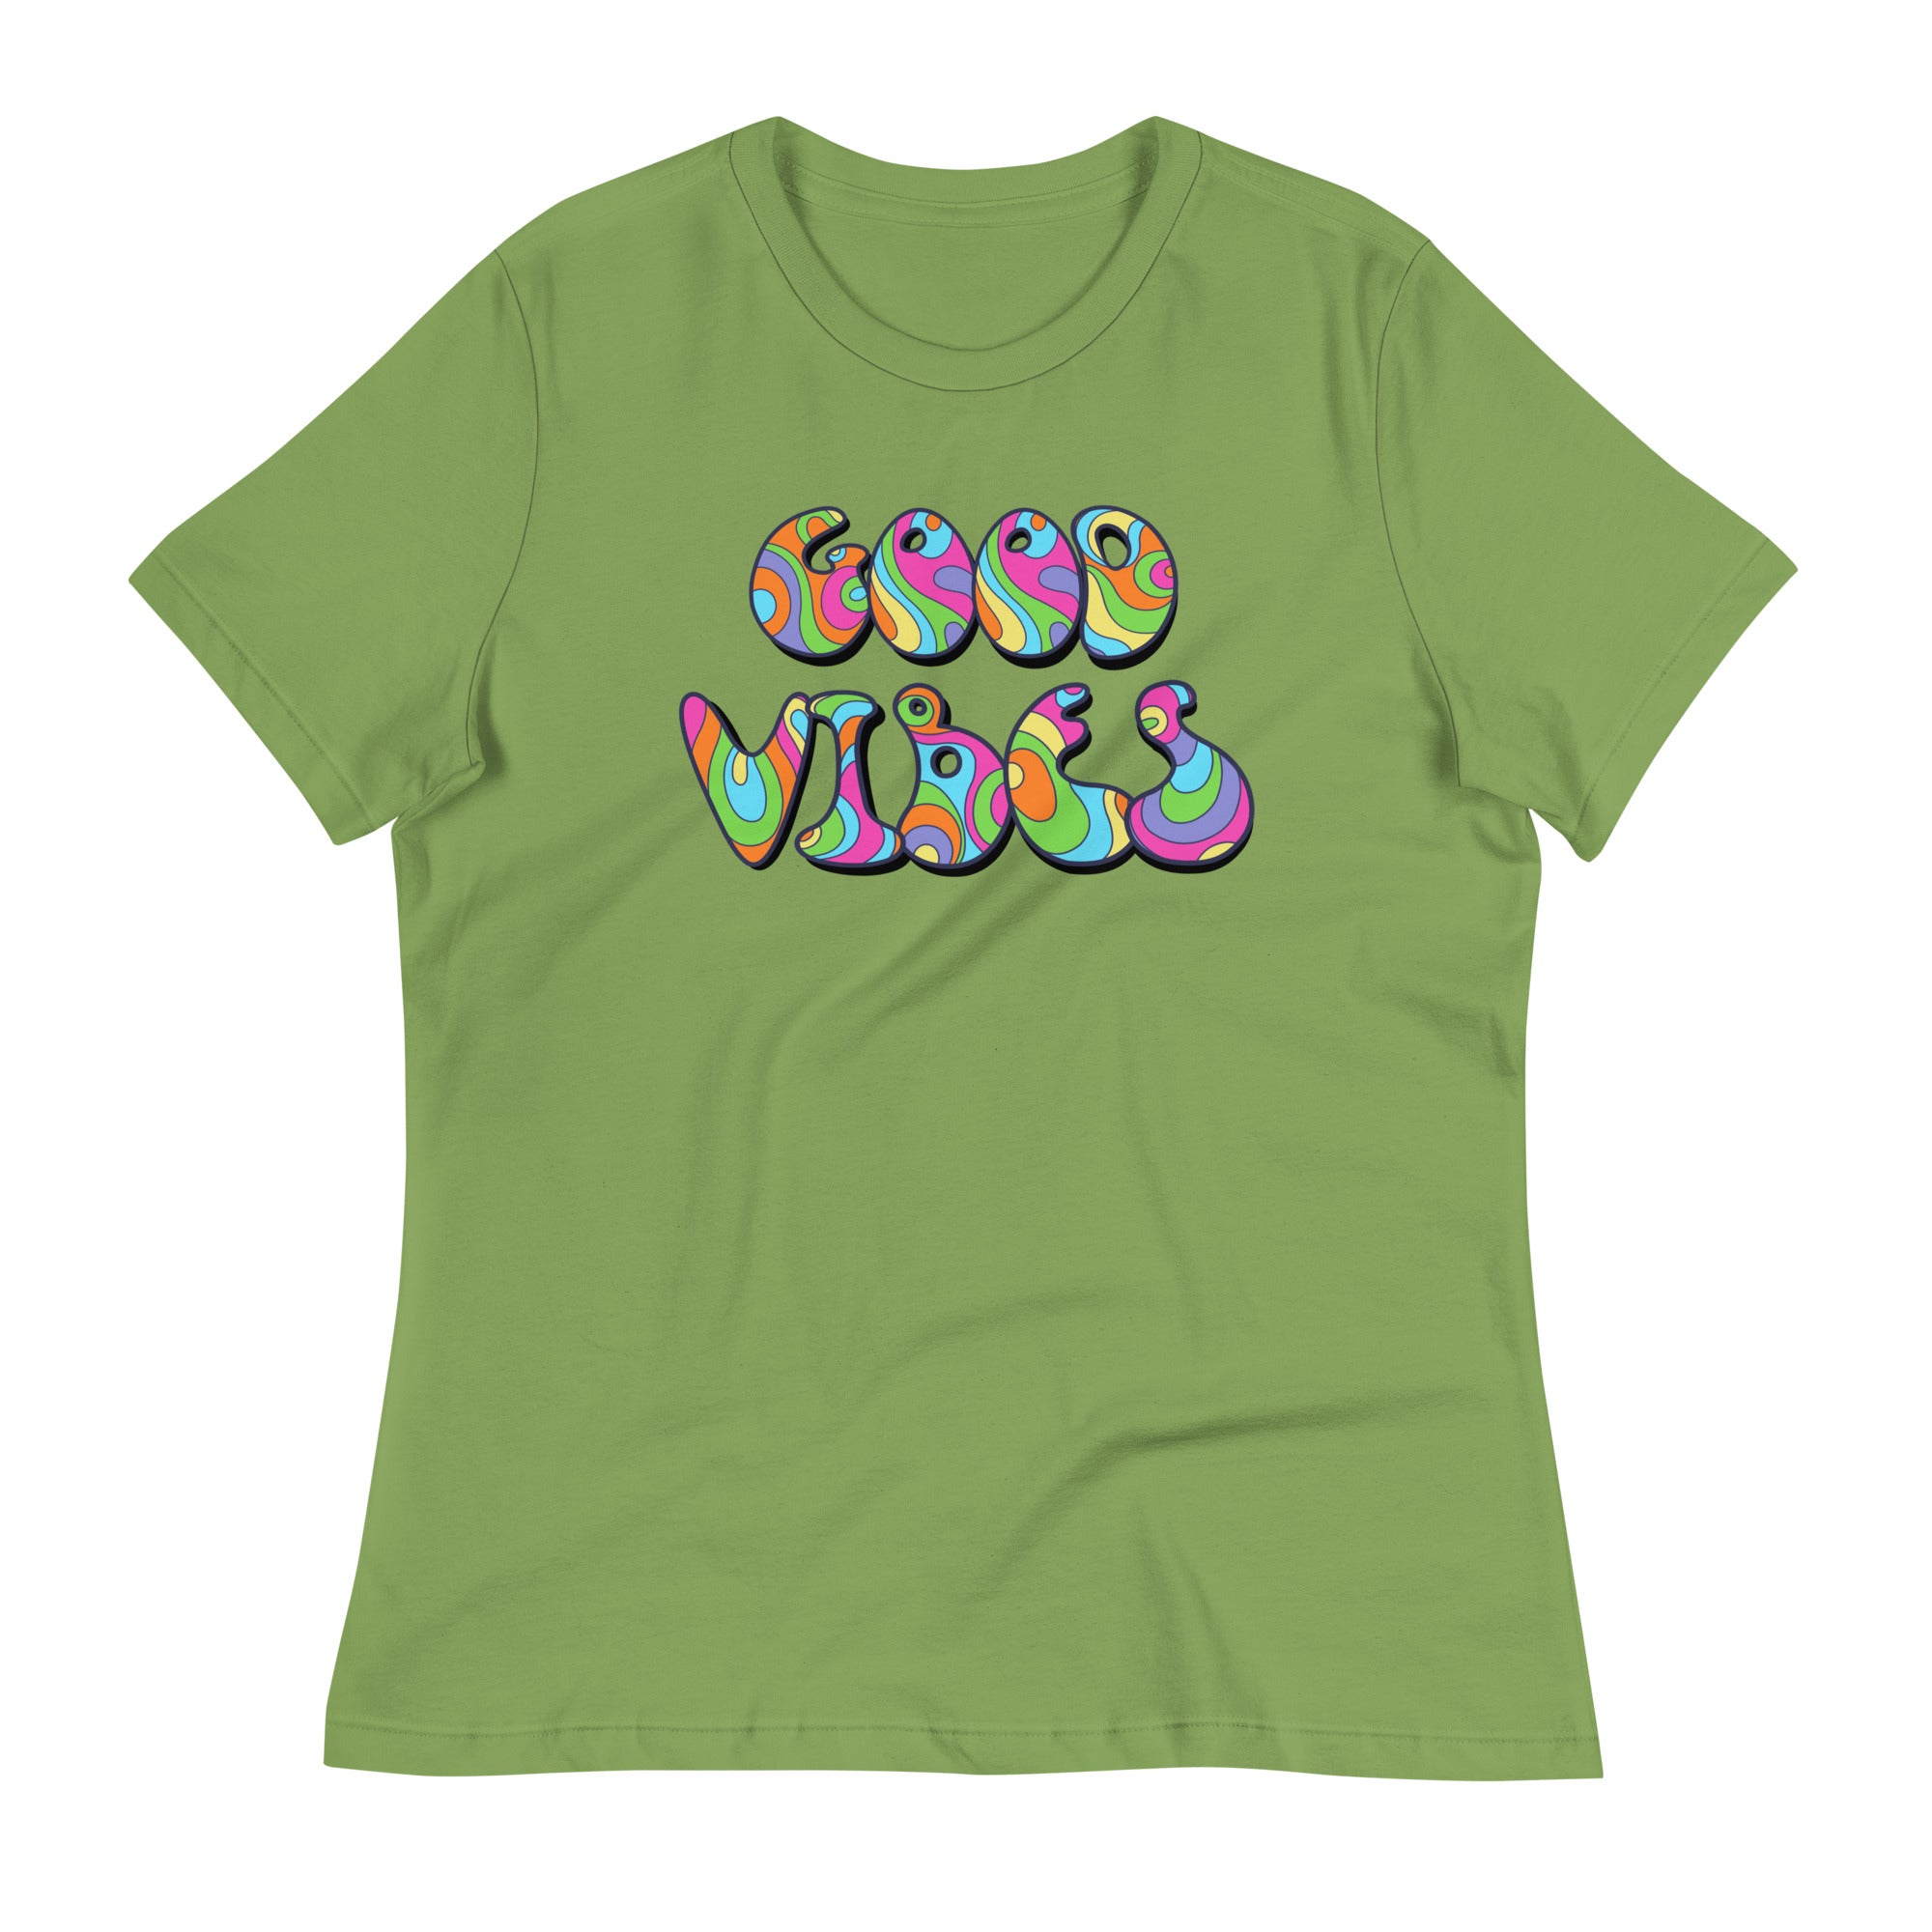 Good Vibes Women's Relaxed T-Shirt